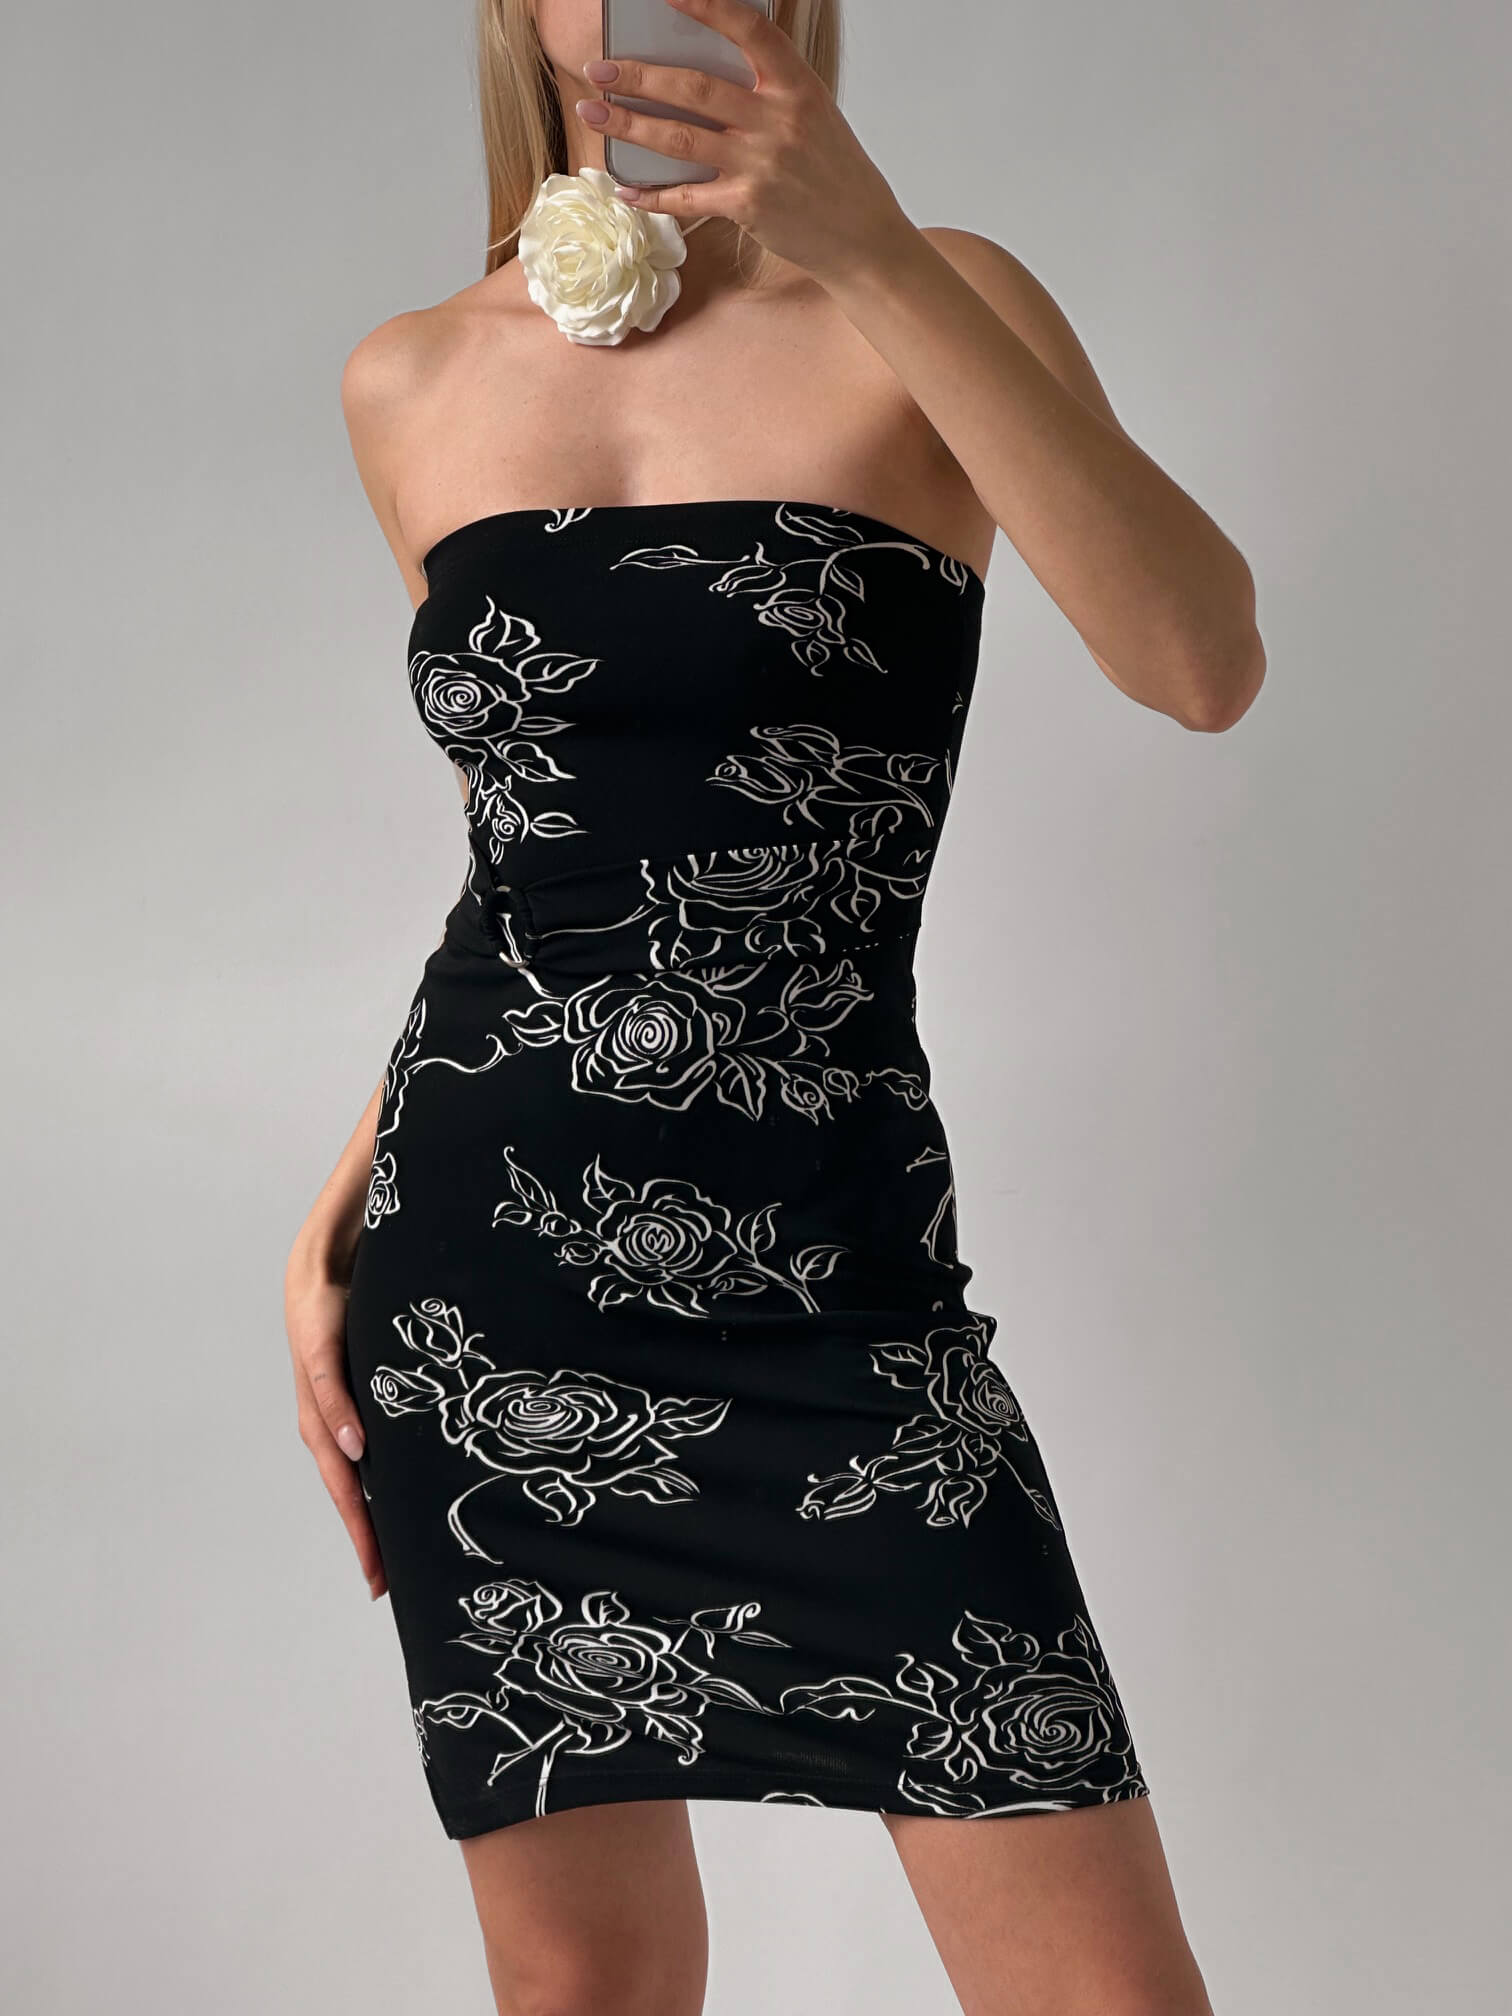 Vintage Strapless Rose Printed Dress | S